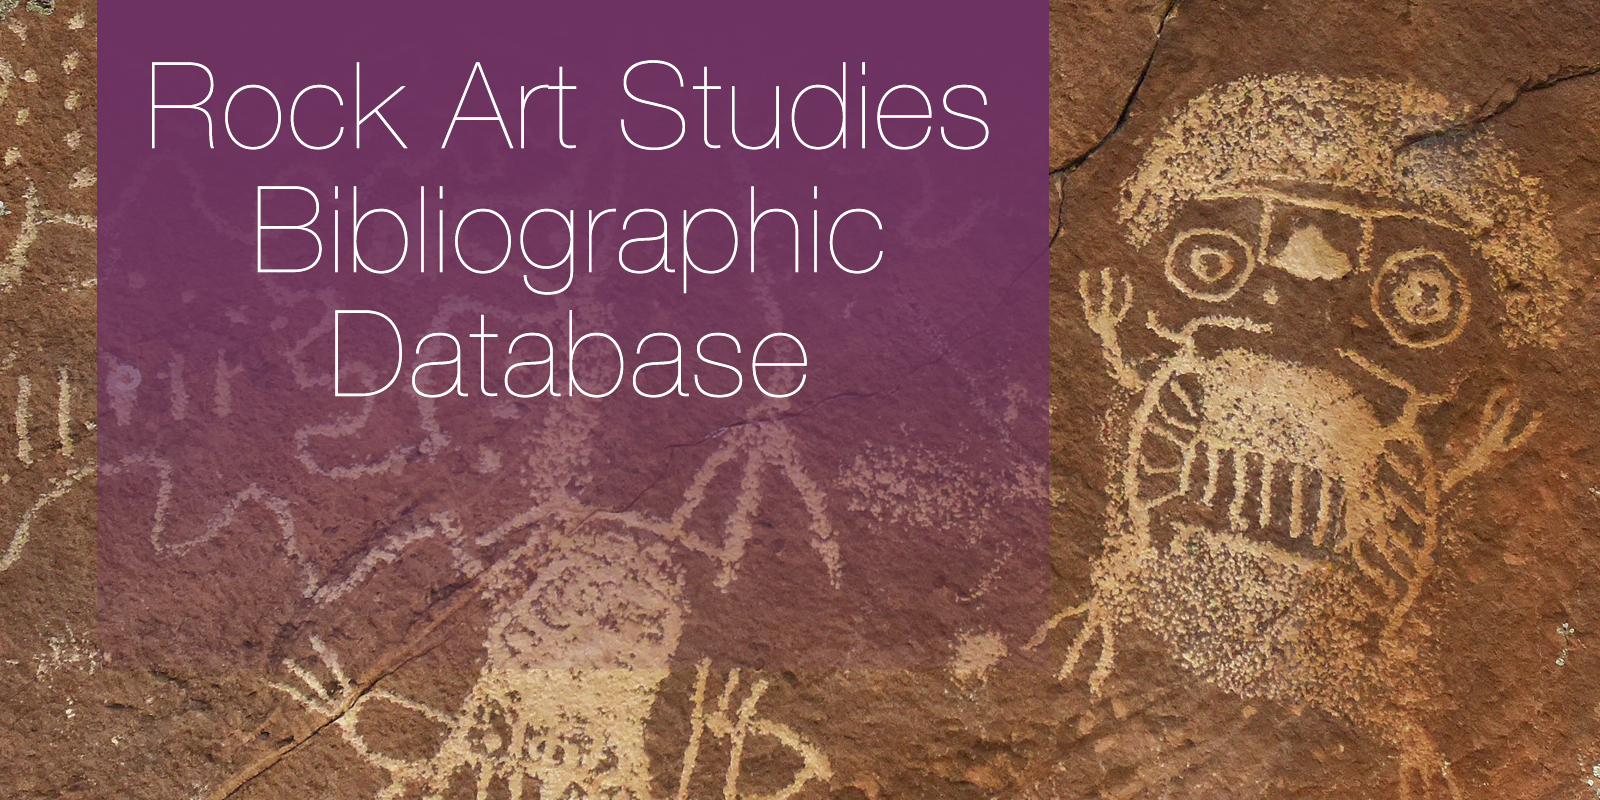 Rock Art Studies Bibliographic Database